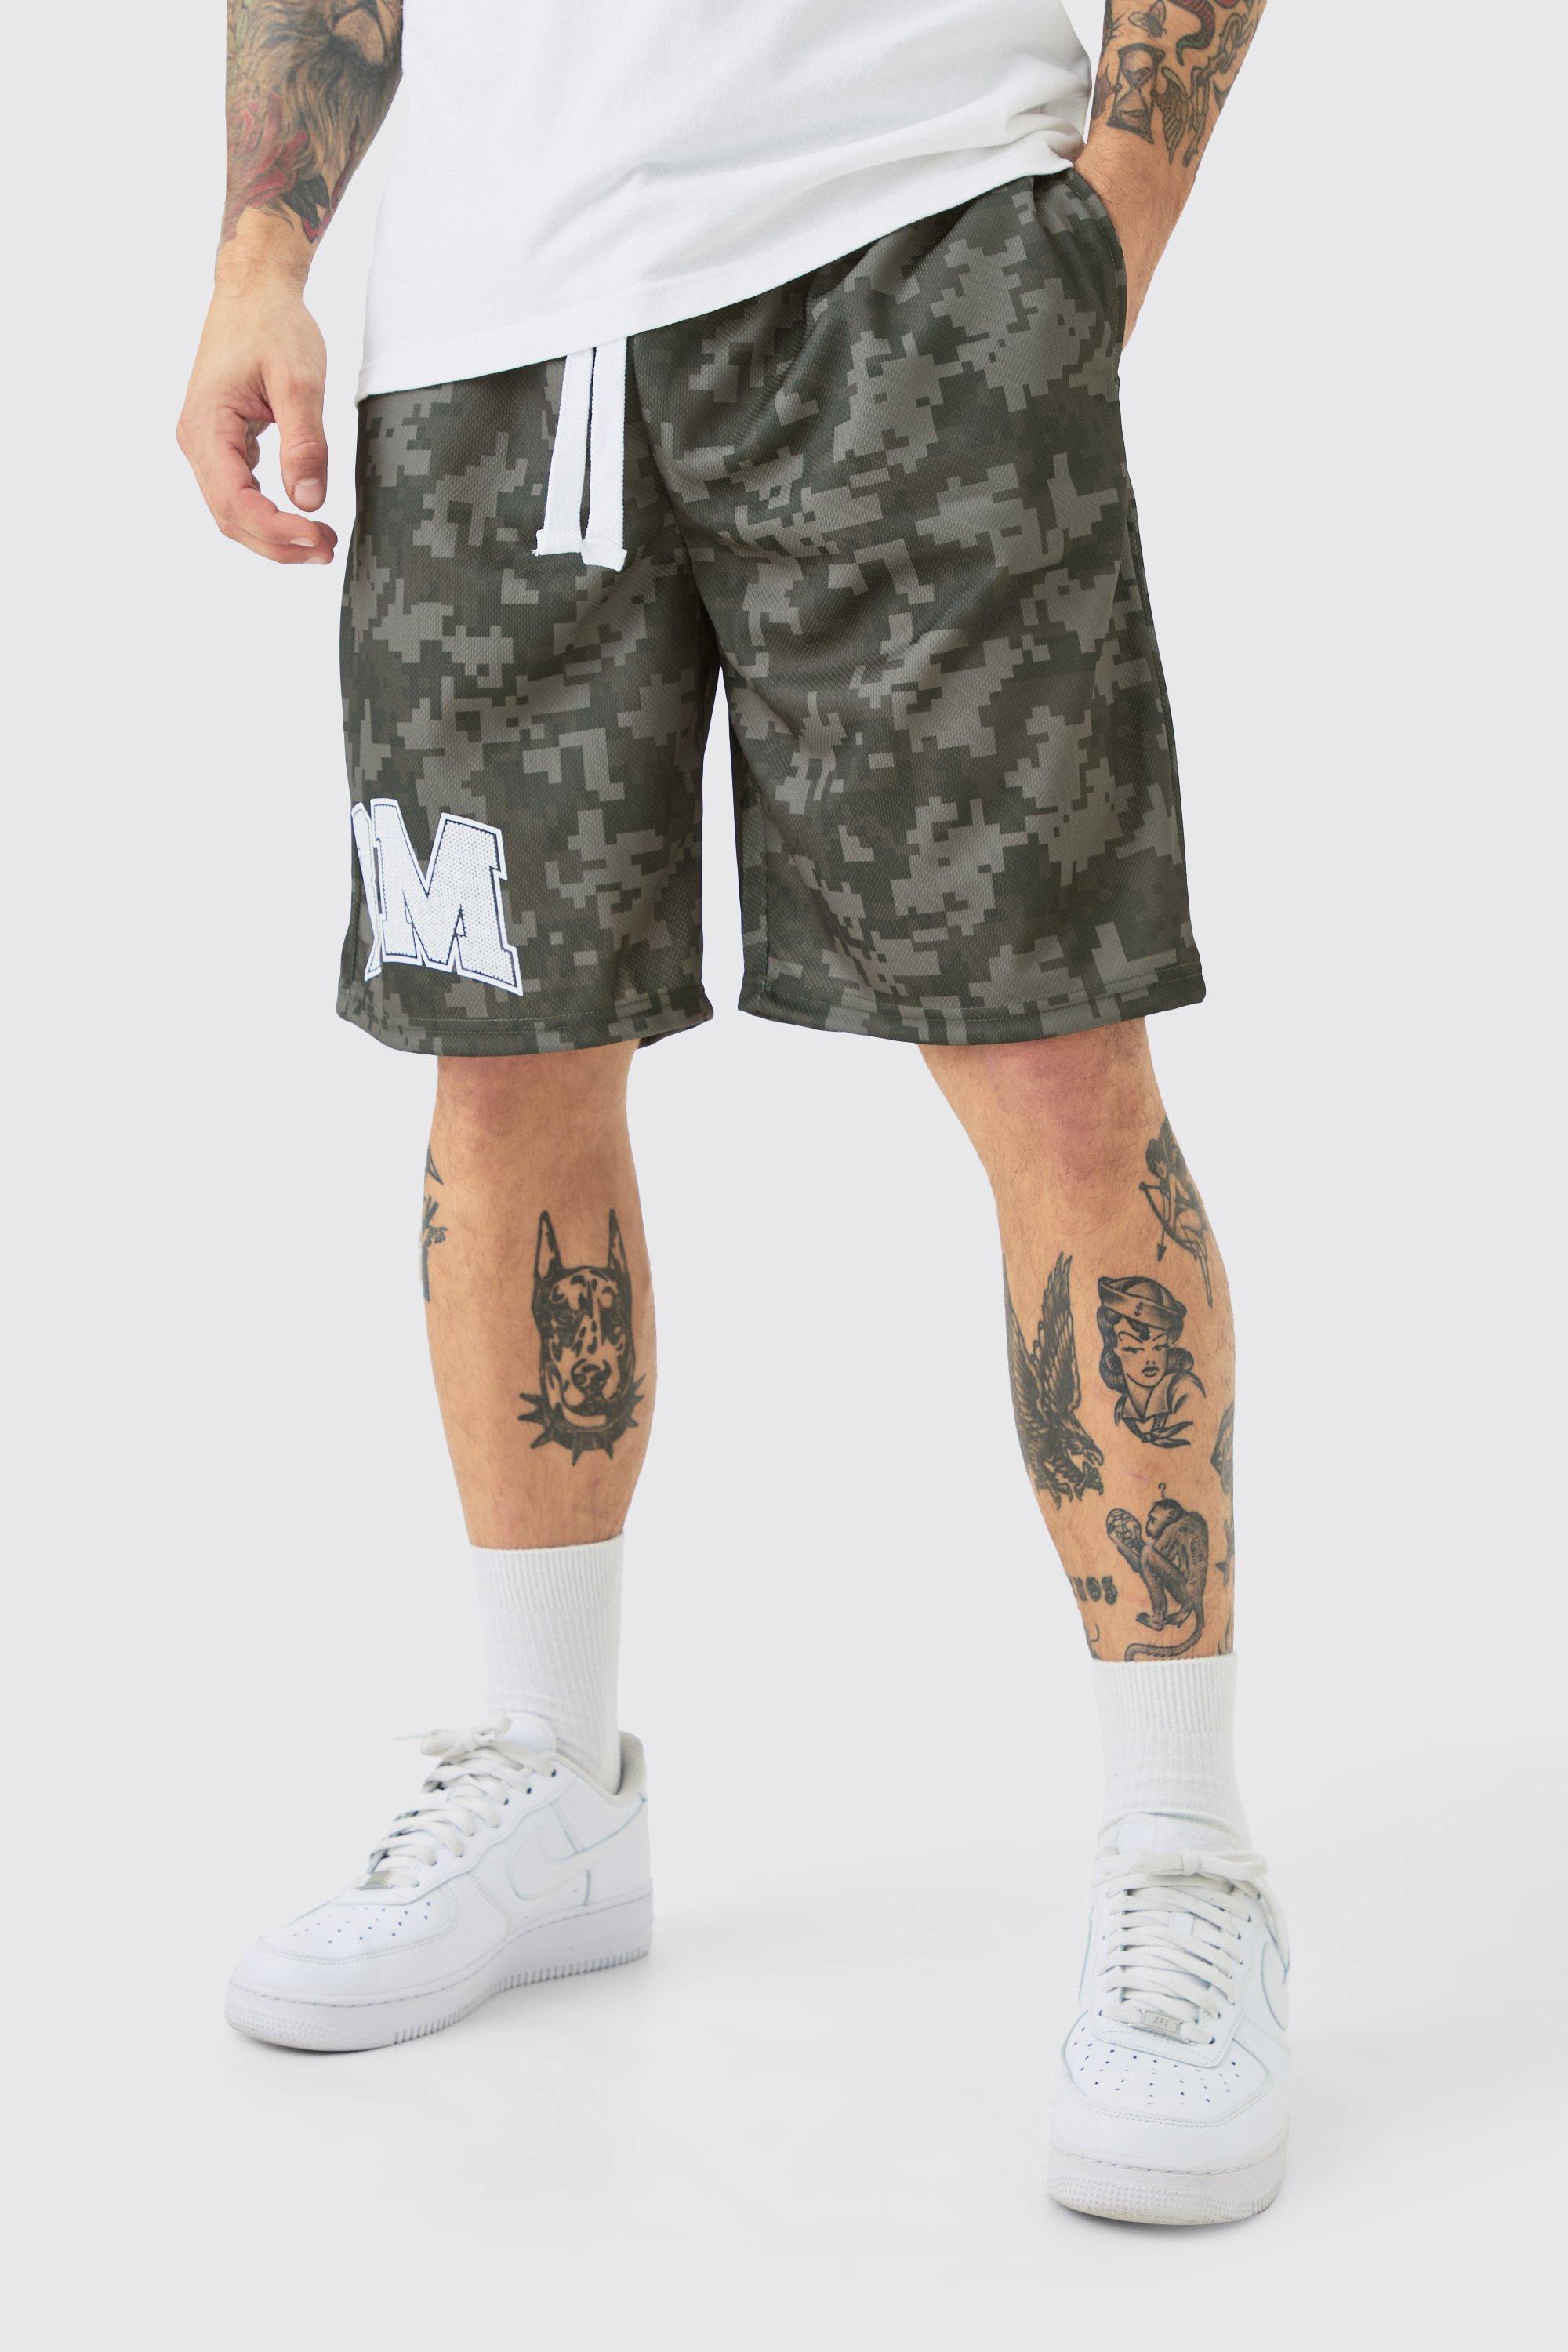 Image of Bm Camo Printed Mesh Basketball Shorts, Verde